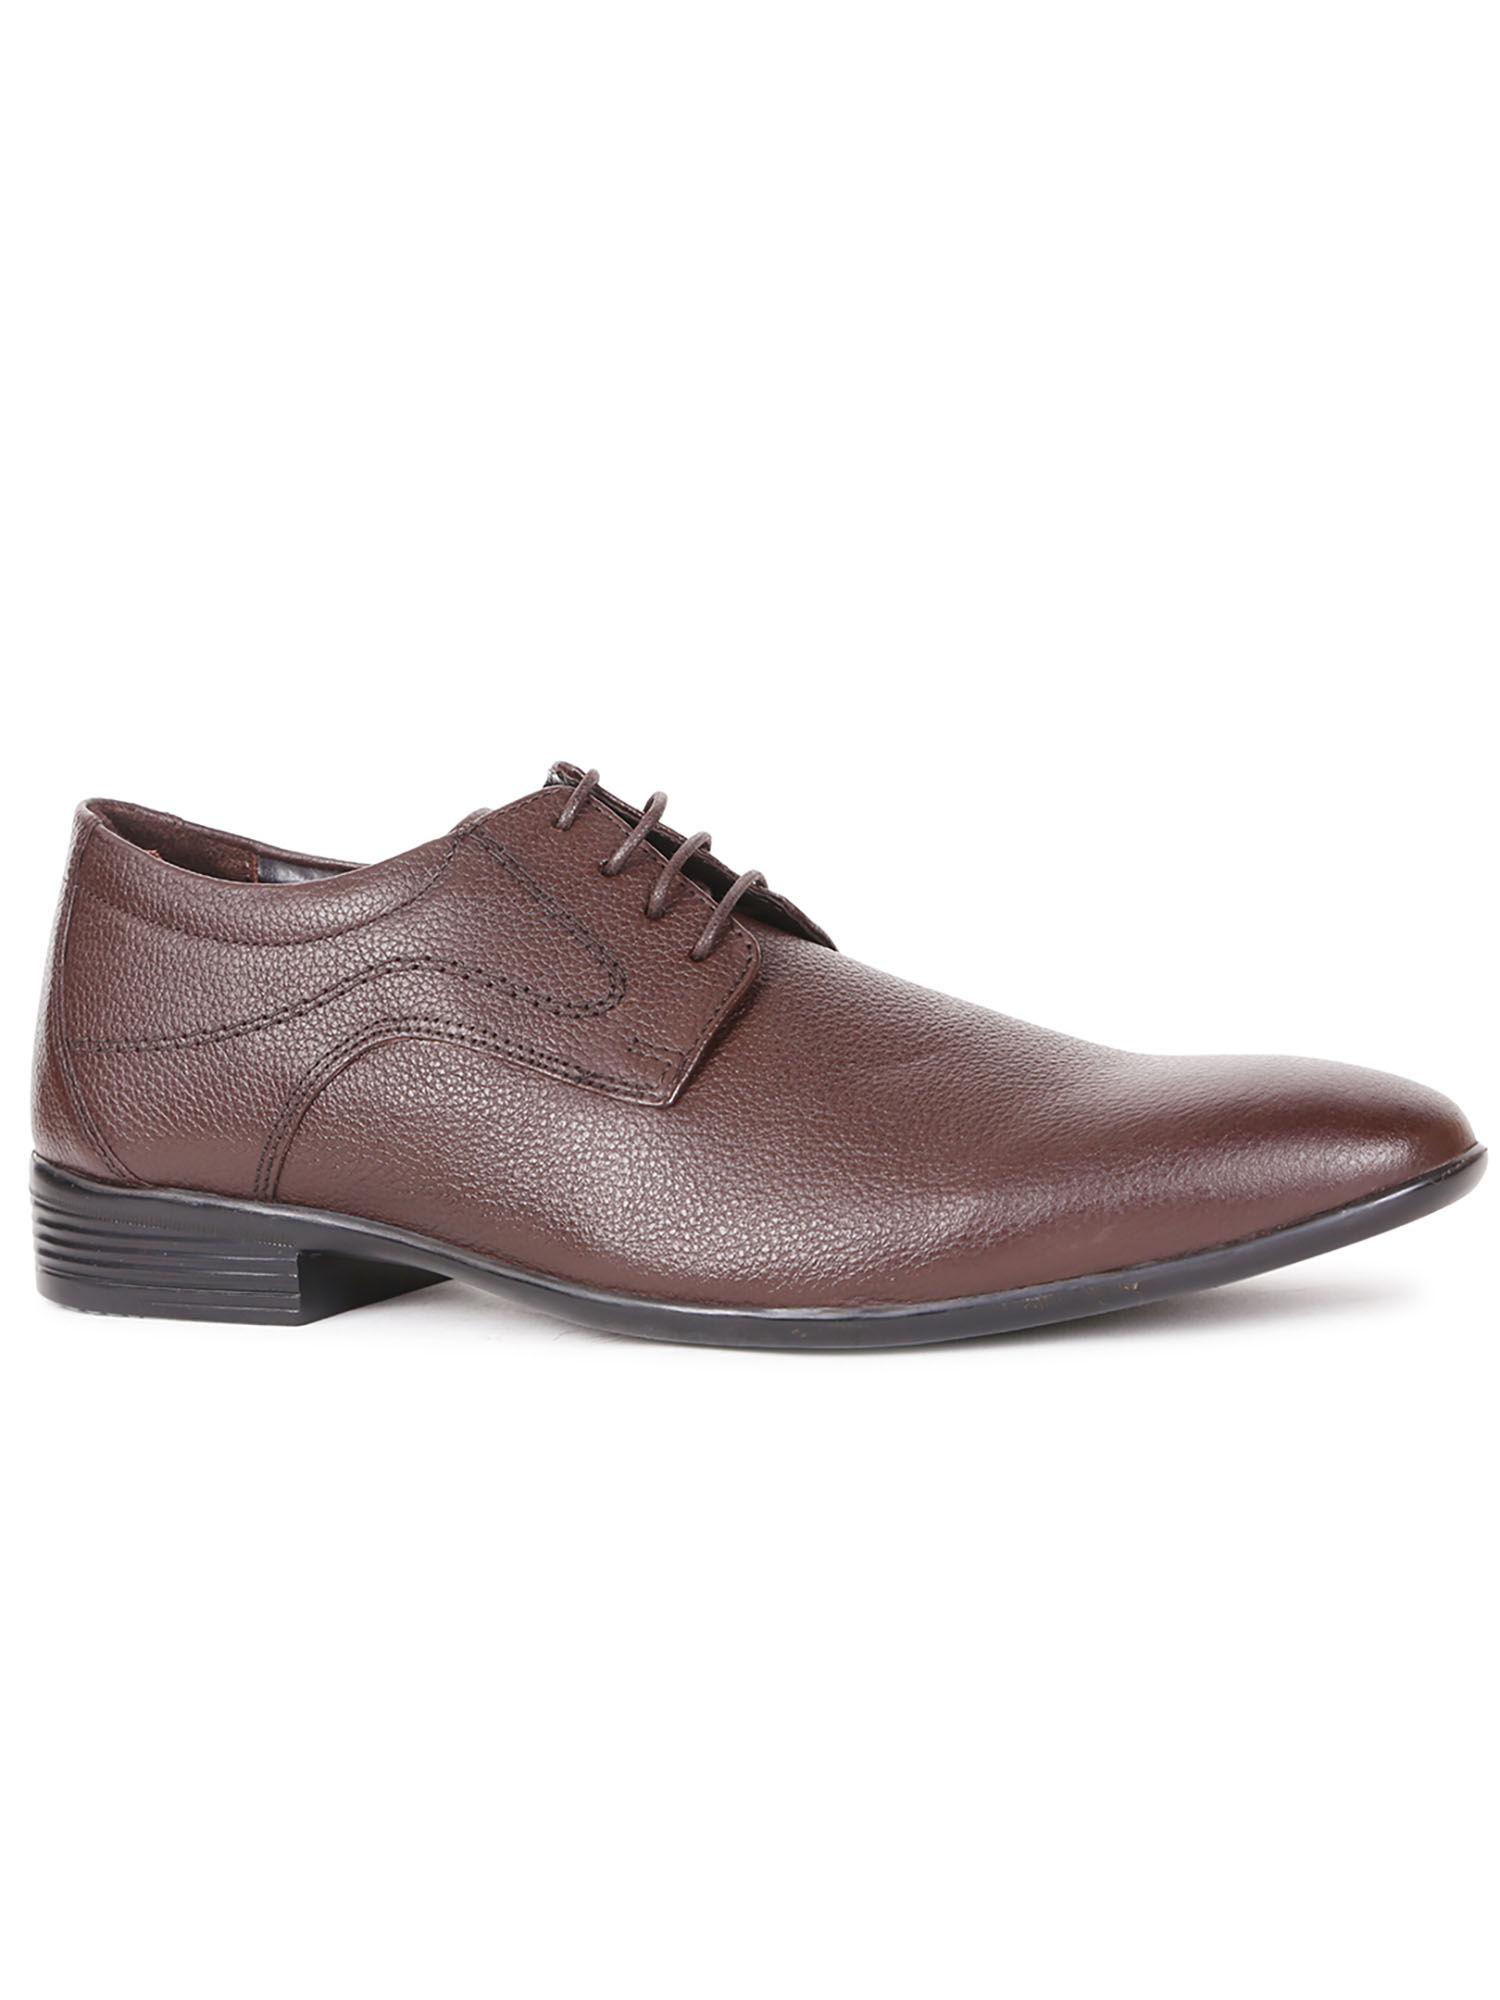 men-brown-lace-up-formal-shoes